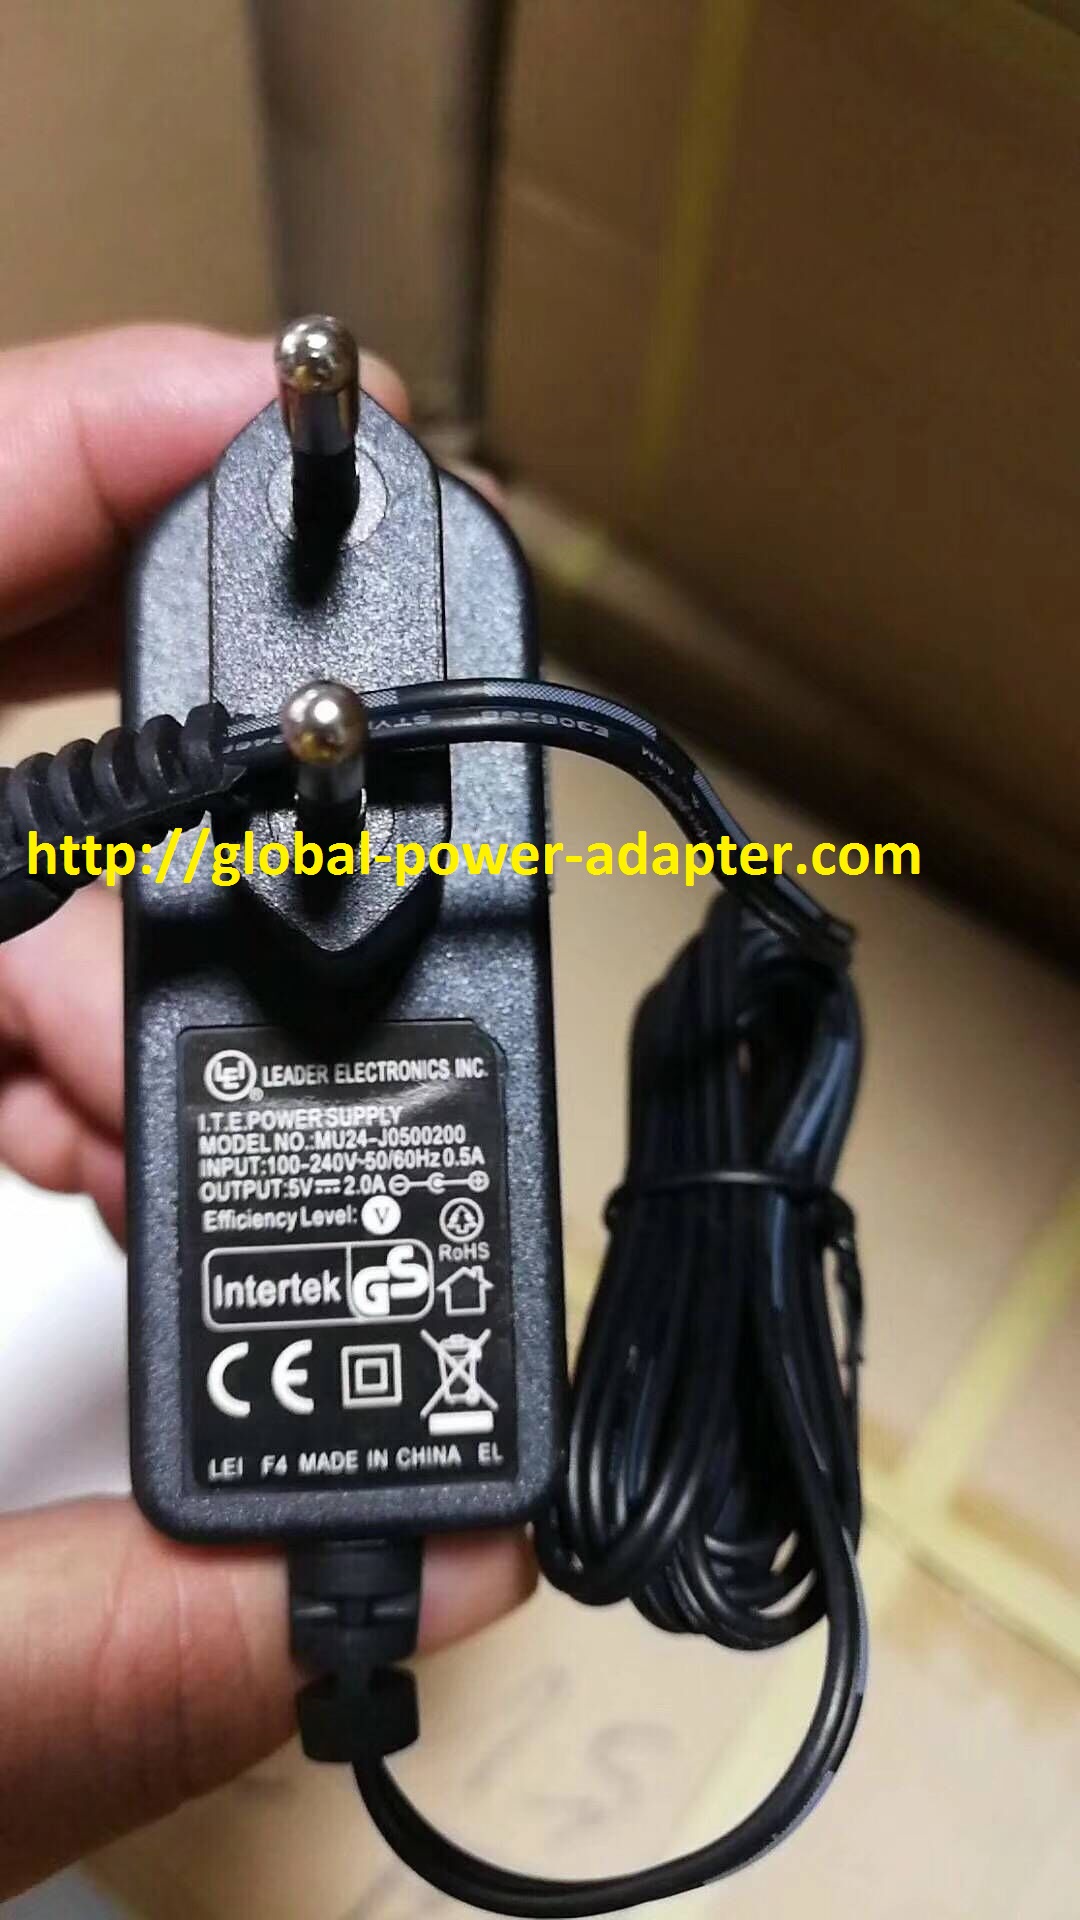 Brand NEW LEI MU24-J0500200 AC DC Adapter POWER SUPPLY - Click Image to Close